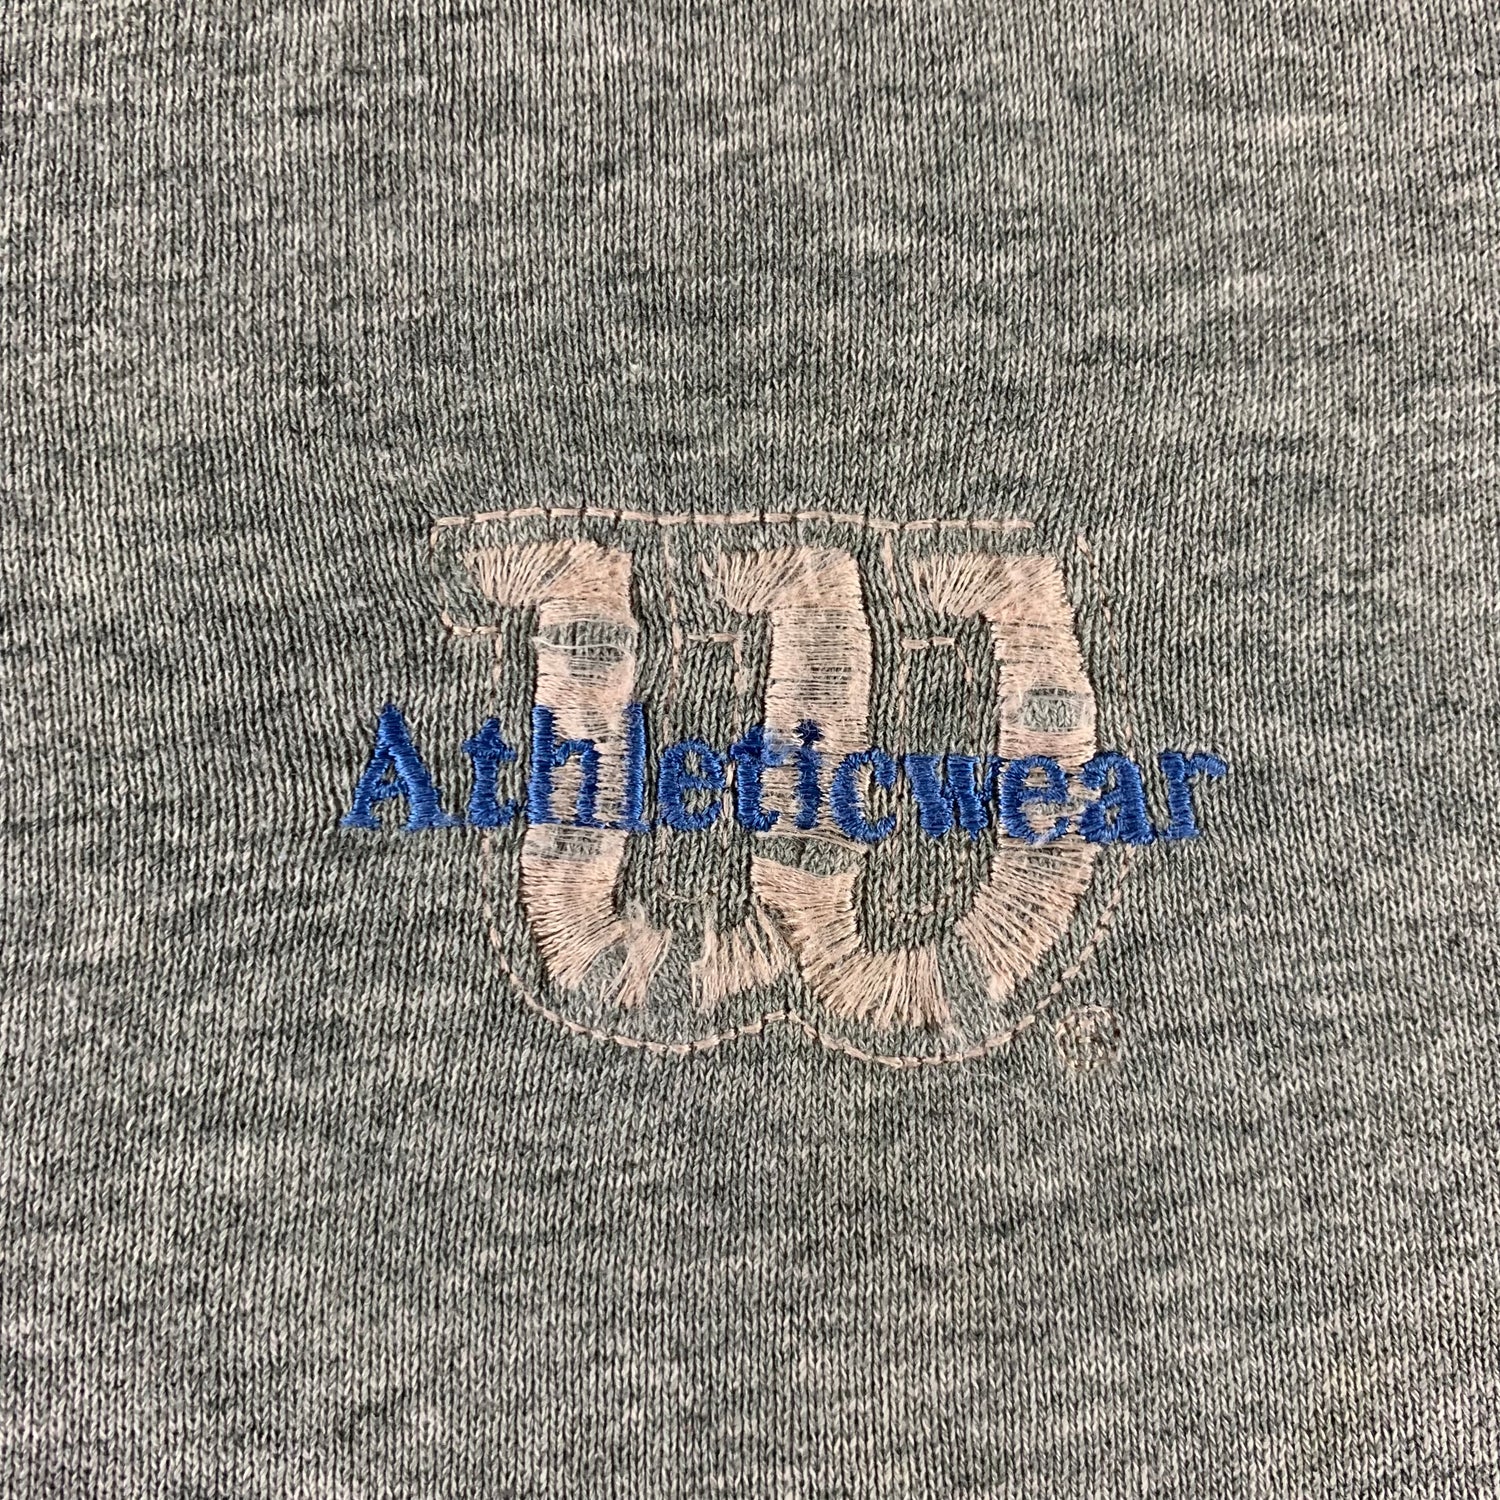 Vintage 1990s Wilson Athleticwear Sweatshirt size XL